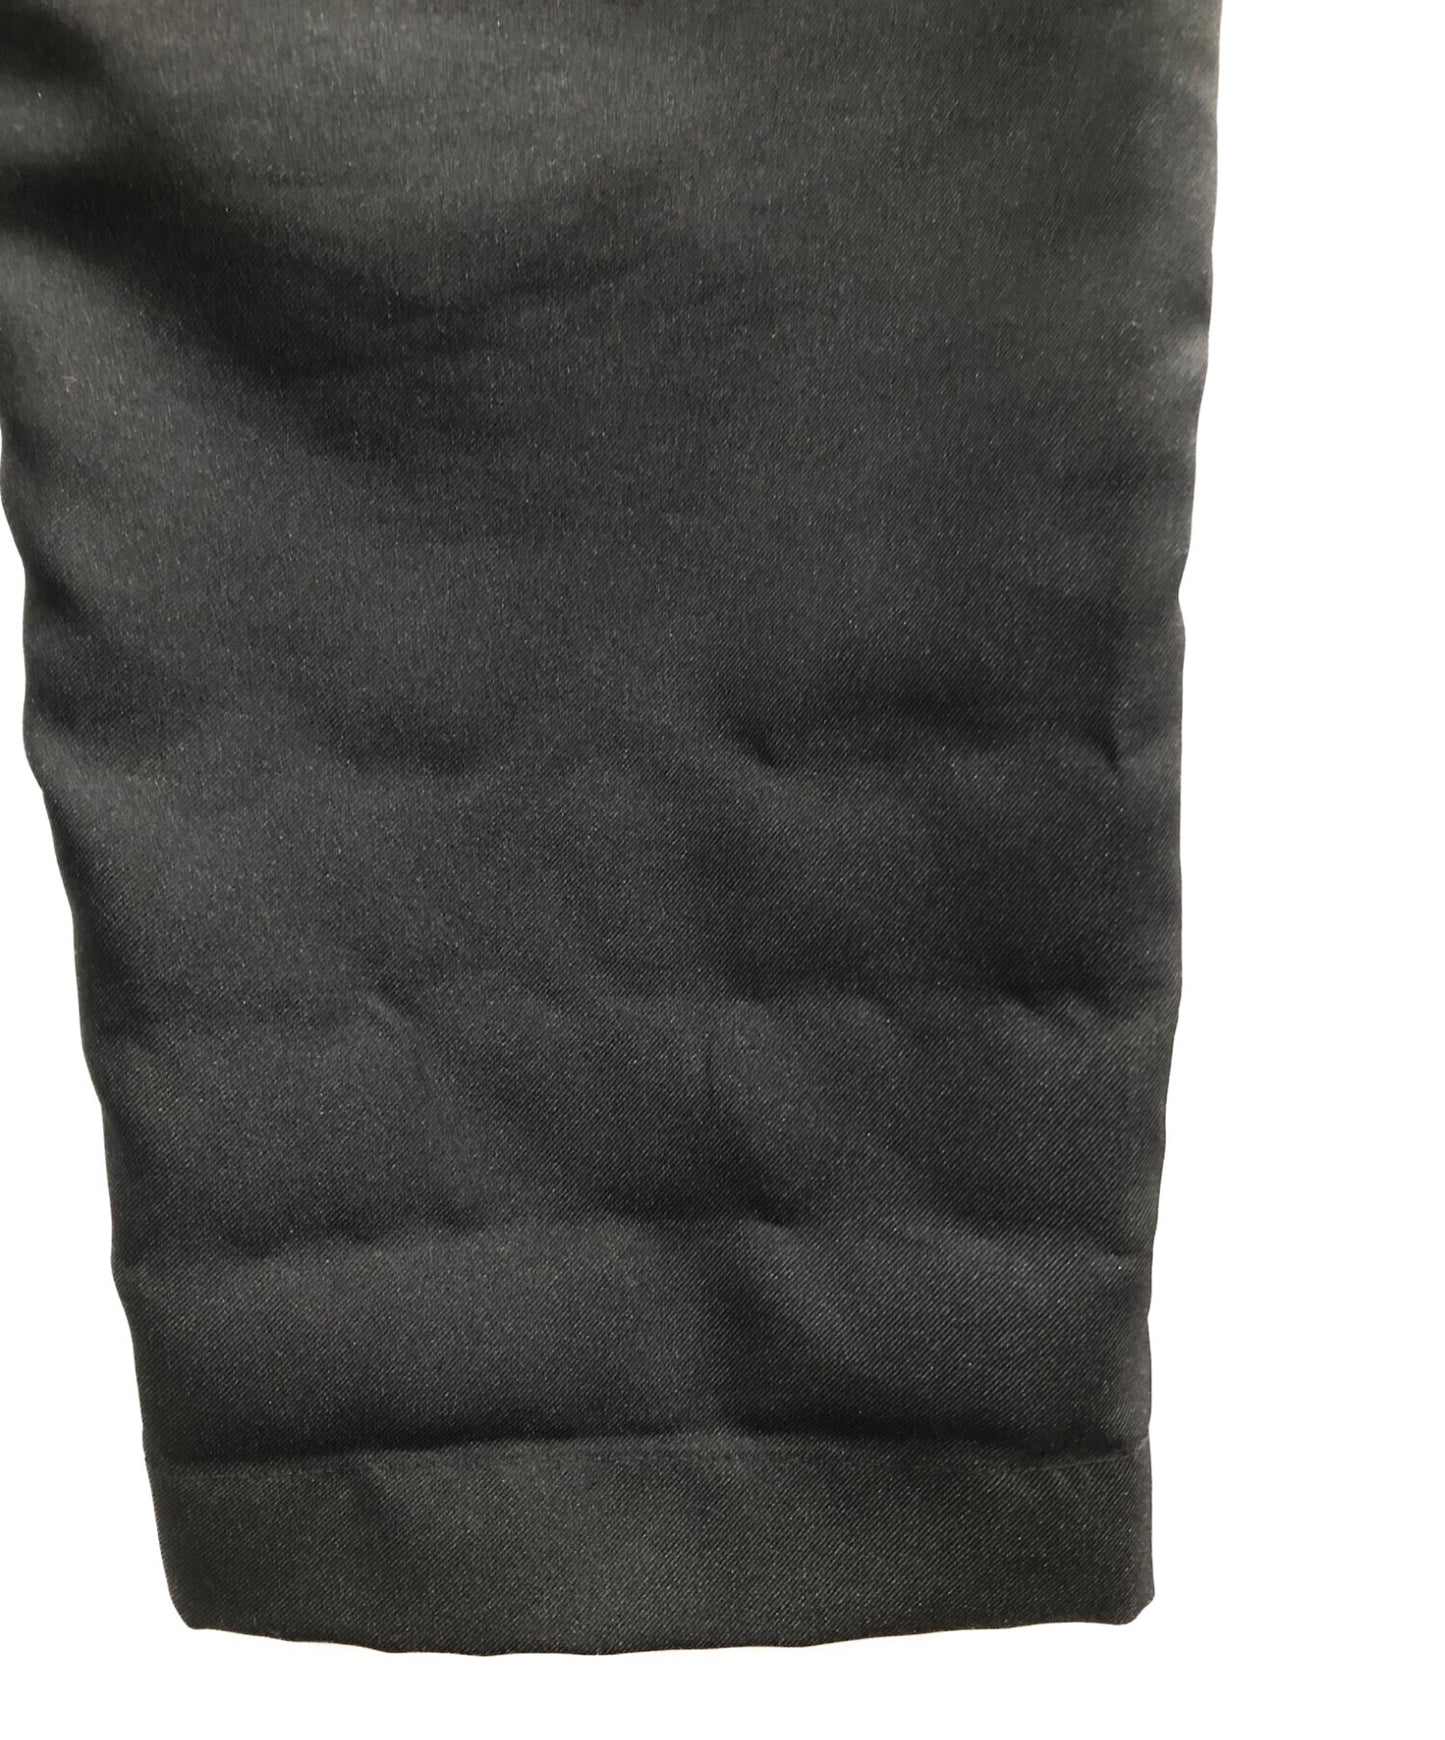 黑色COMME DES GARCONS油漆裤1B-P003